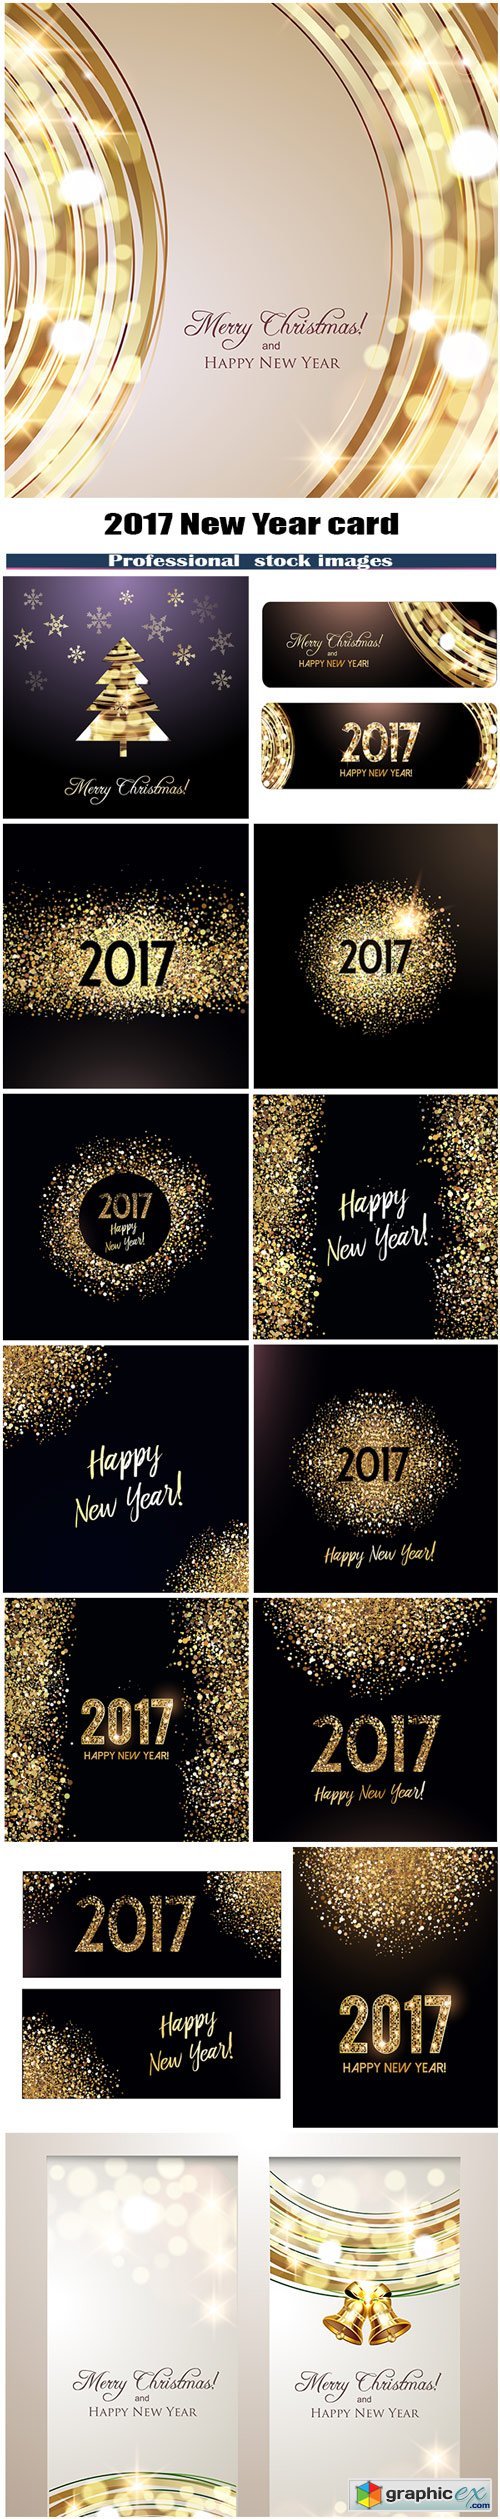 2017 New Year card